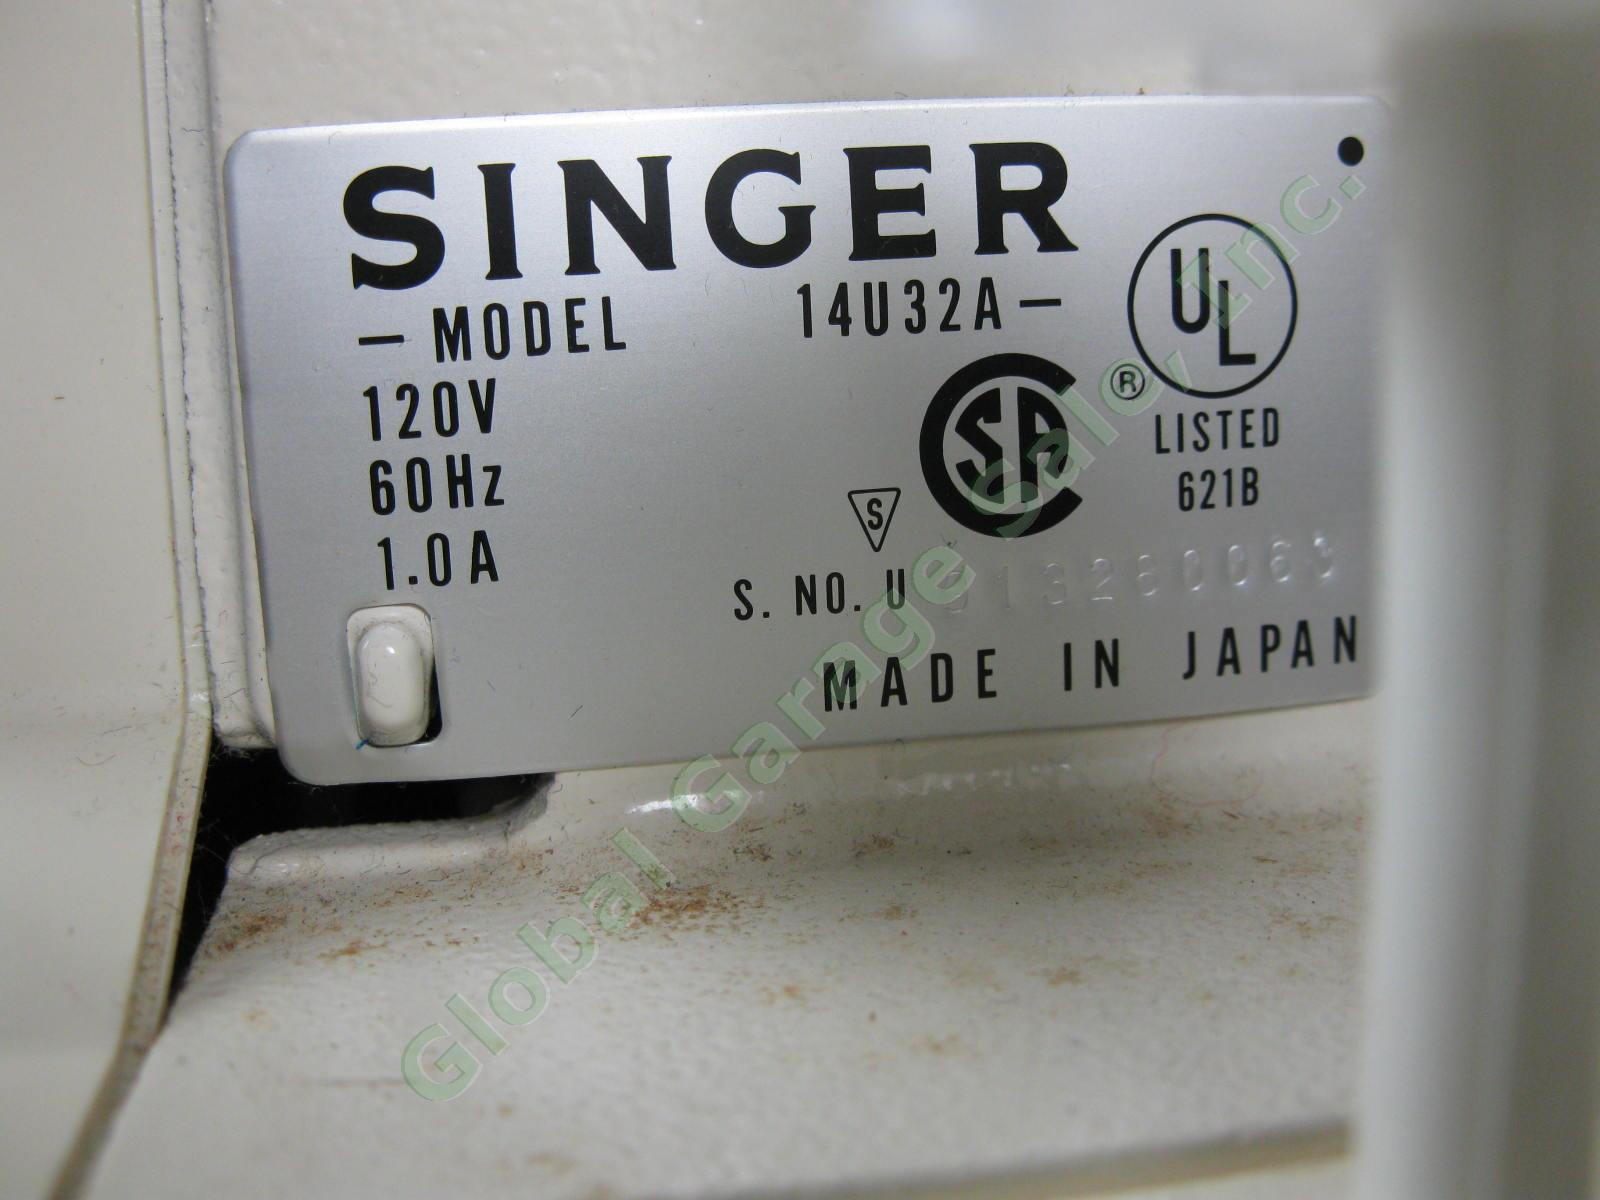 Singer Ultralock 14U32A Serger Sewing Machine Tested Runs Great Pedal Power Cord 8